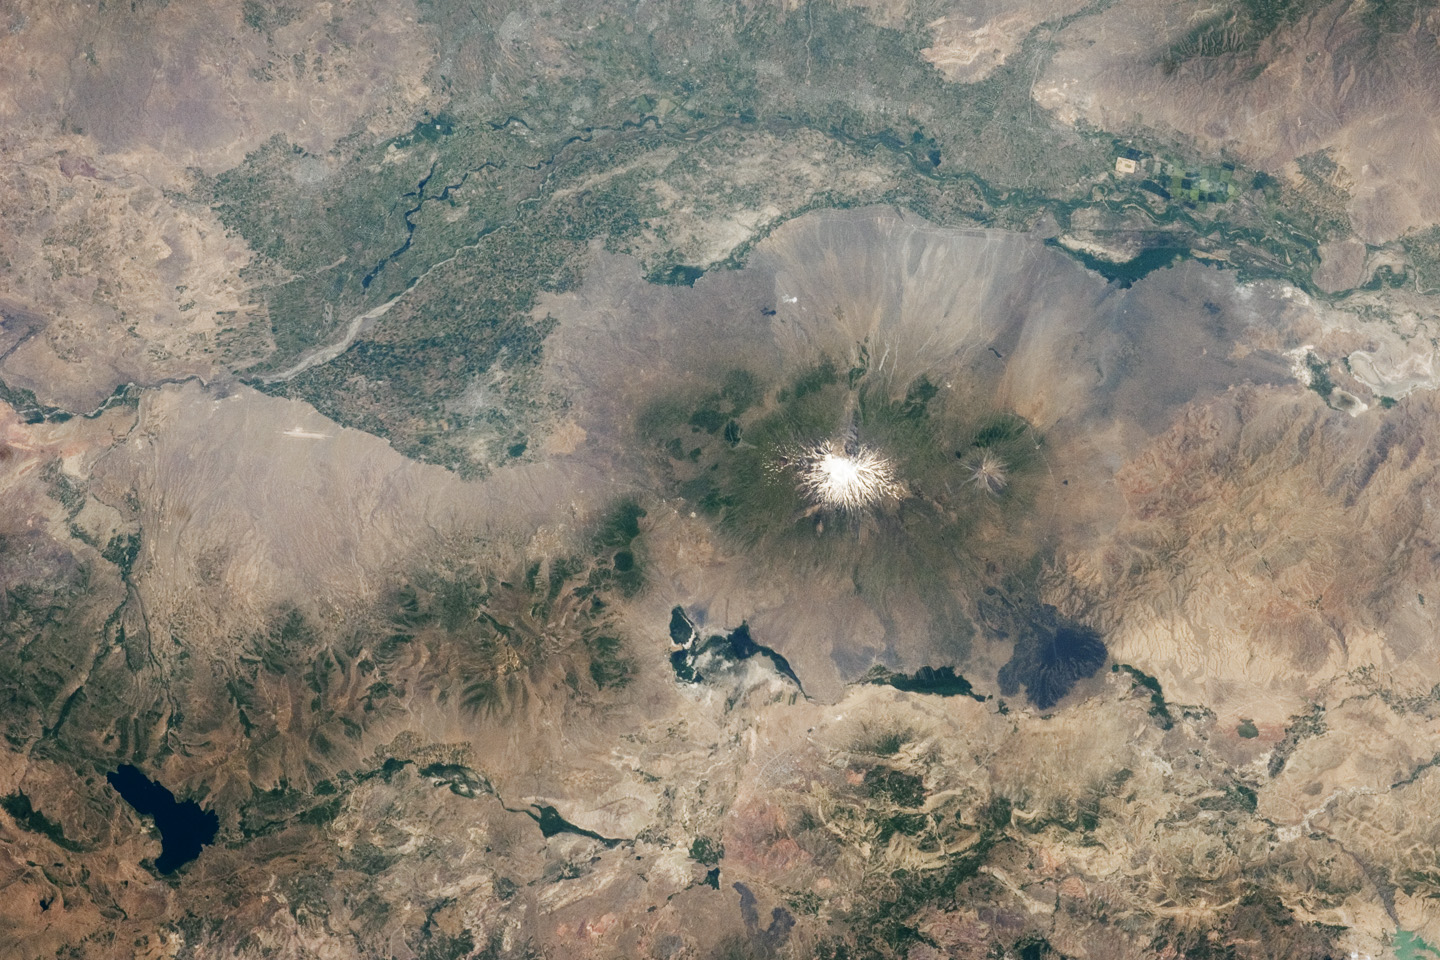 Aras River, Turkey-Armenia-Iran Border Region - related image preview